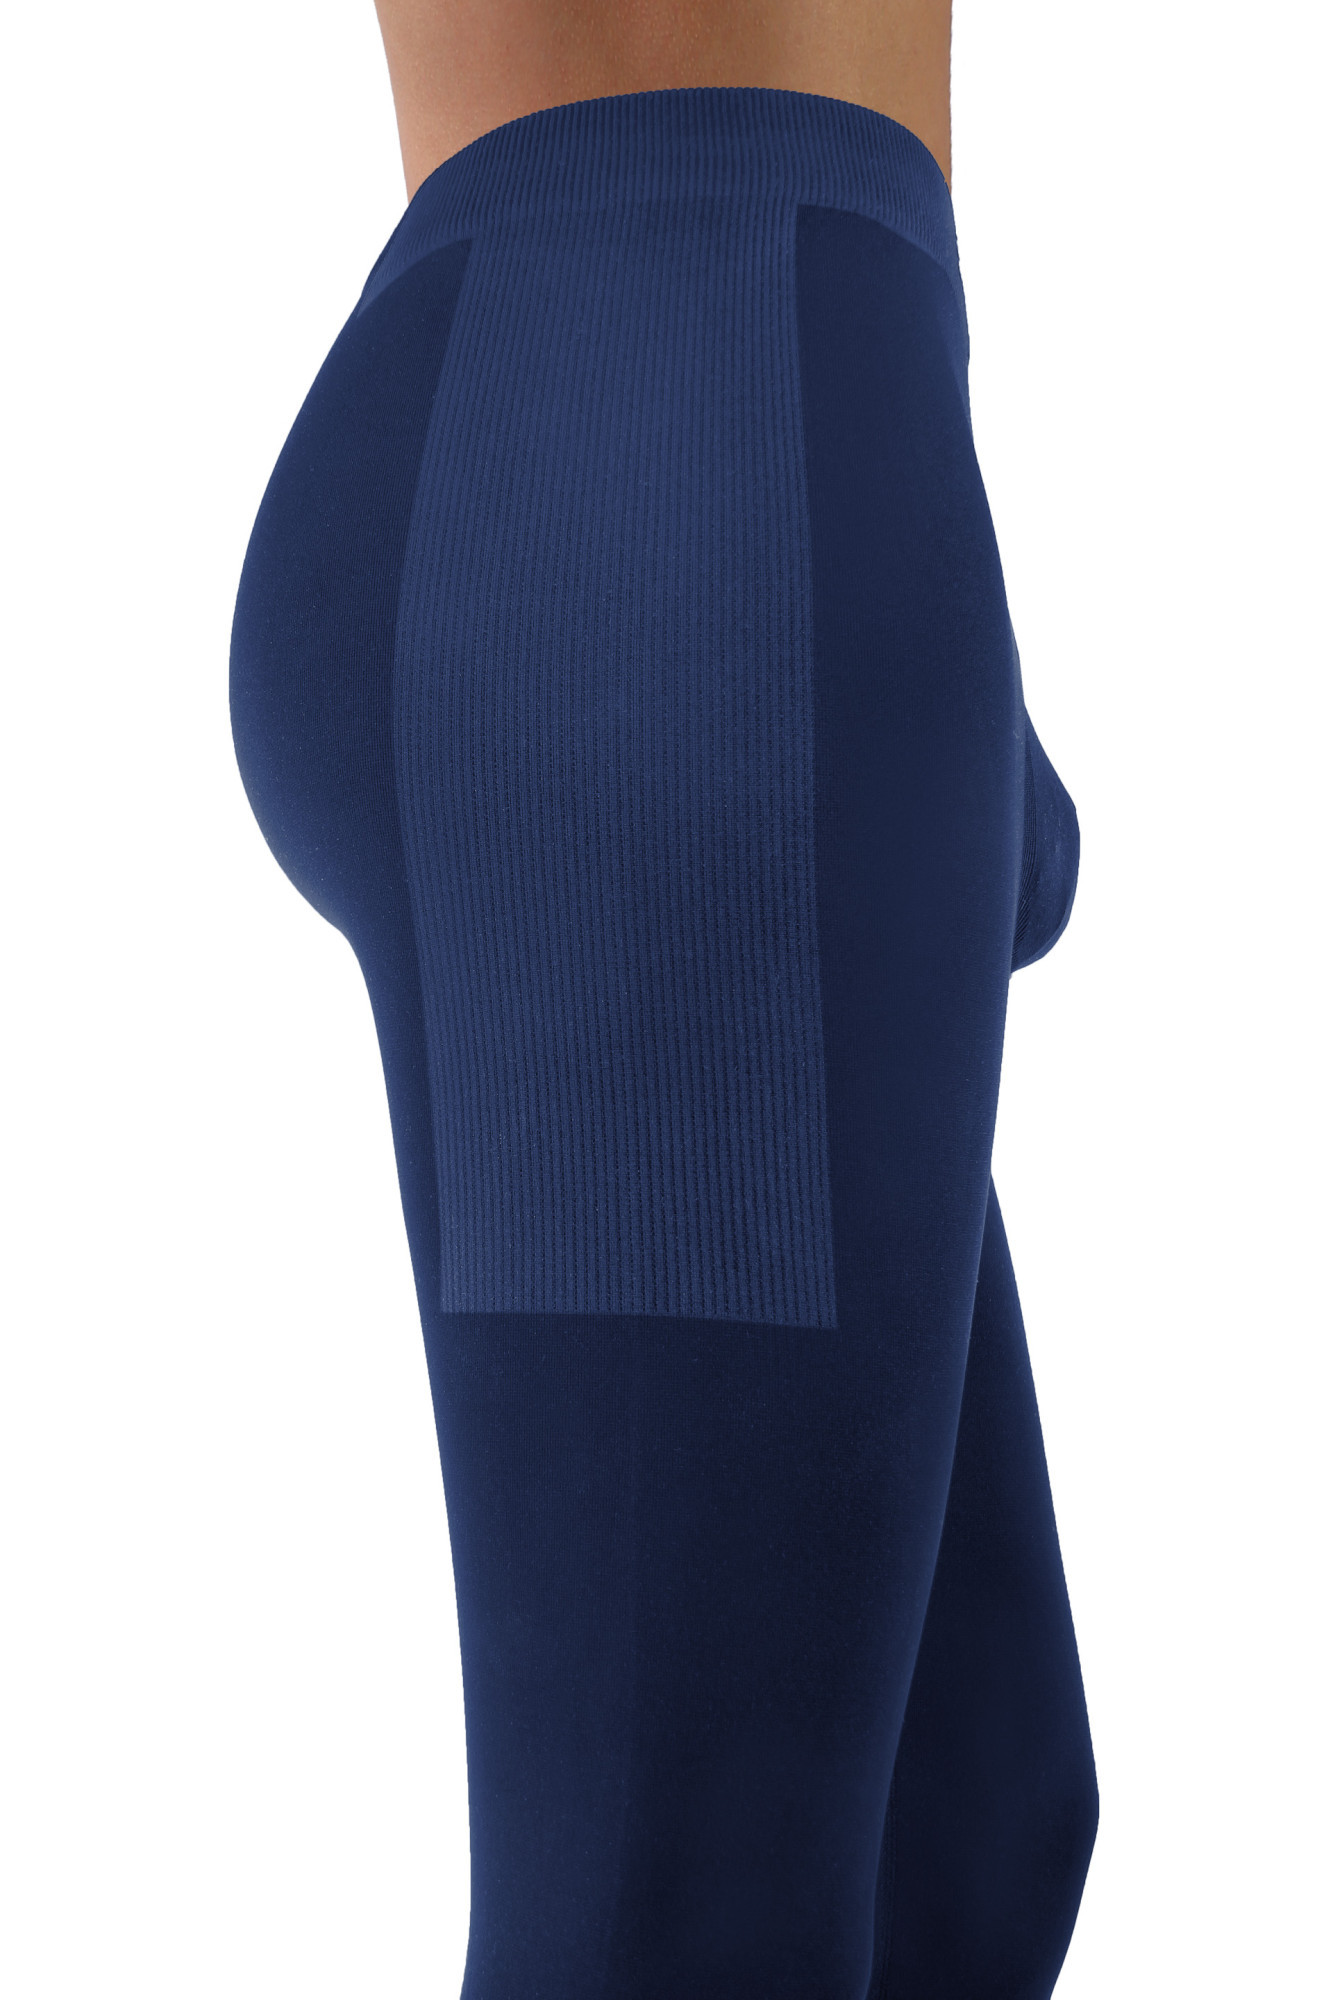 Kalhoty Sesto Senso Thermo CL42 Navy Blue Velikost: S/M